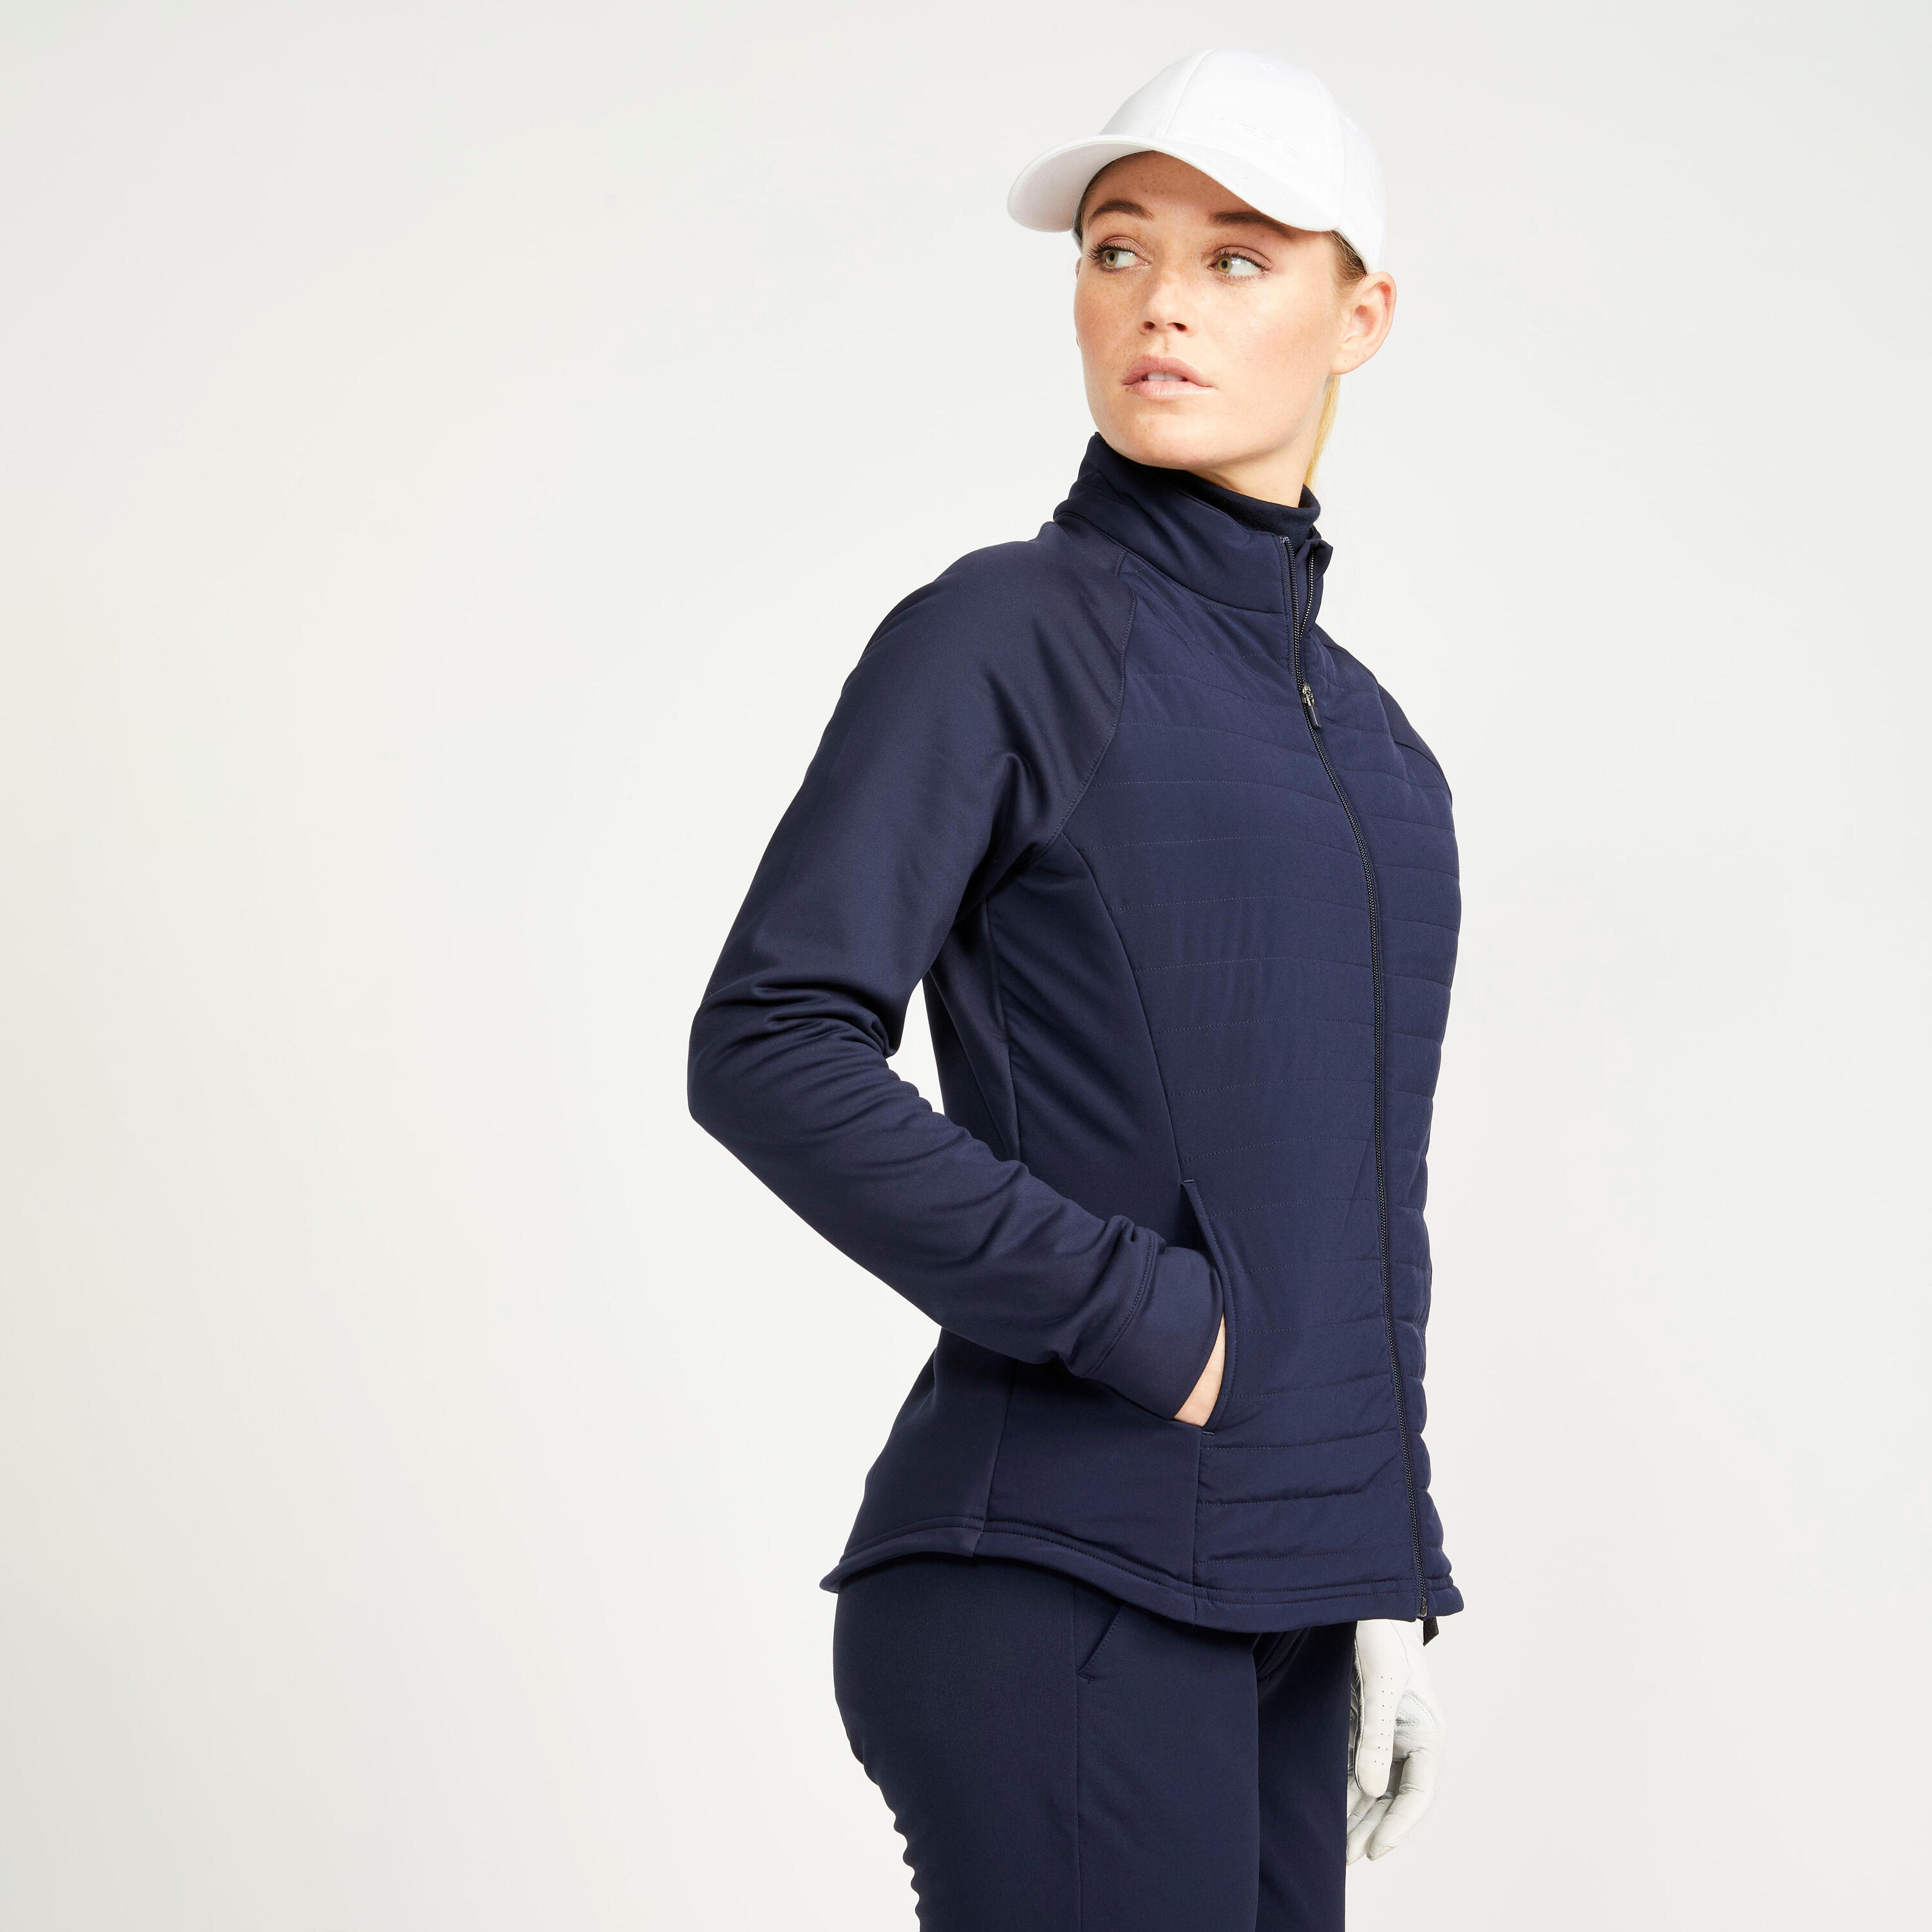 Women's winter golf jacket - CW500 navy blue 2/5